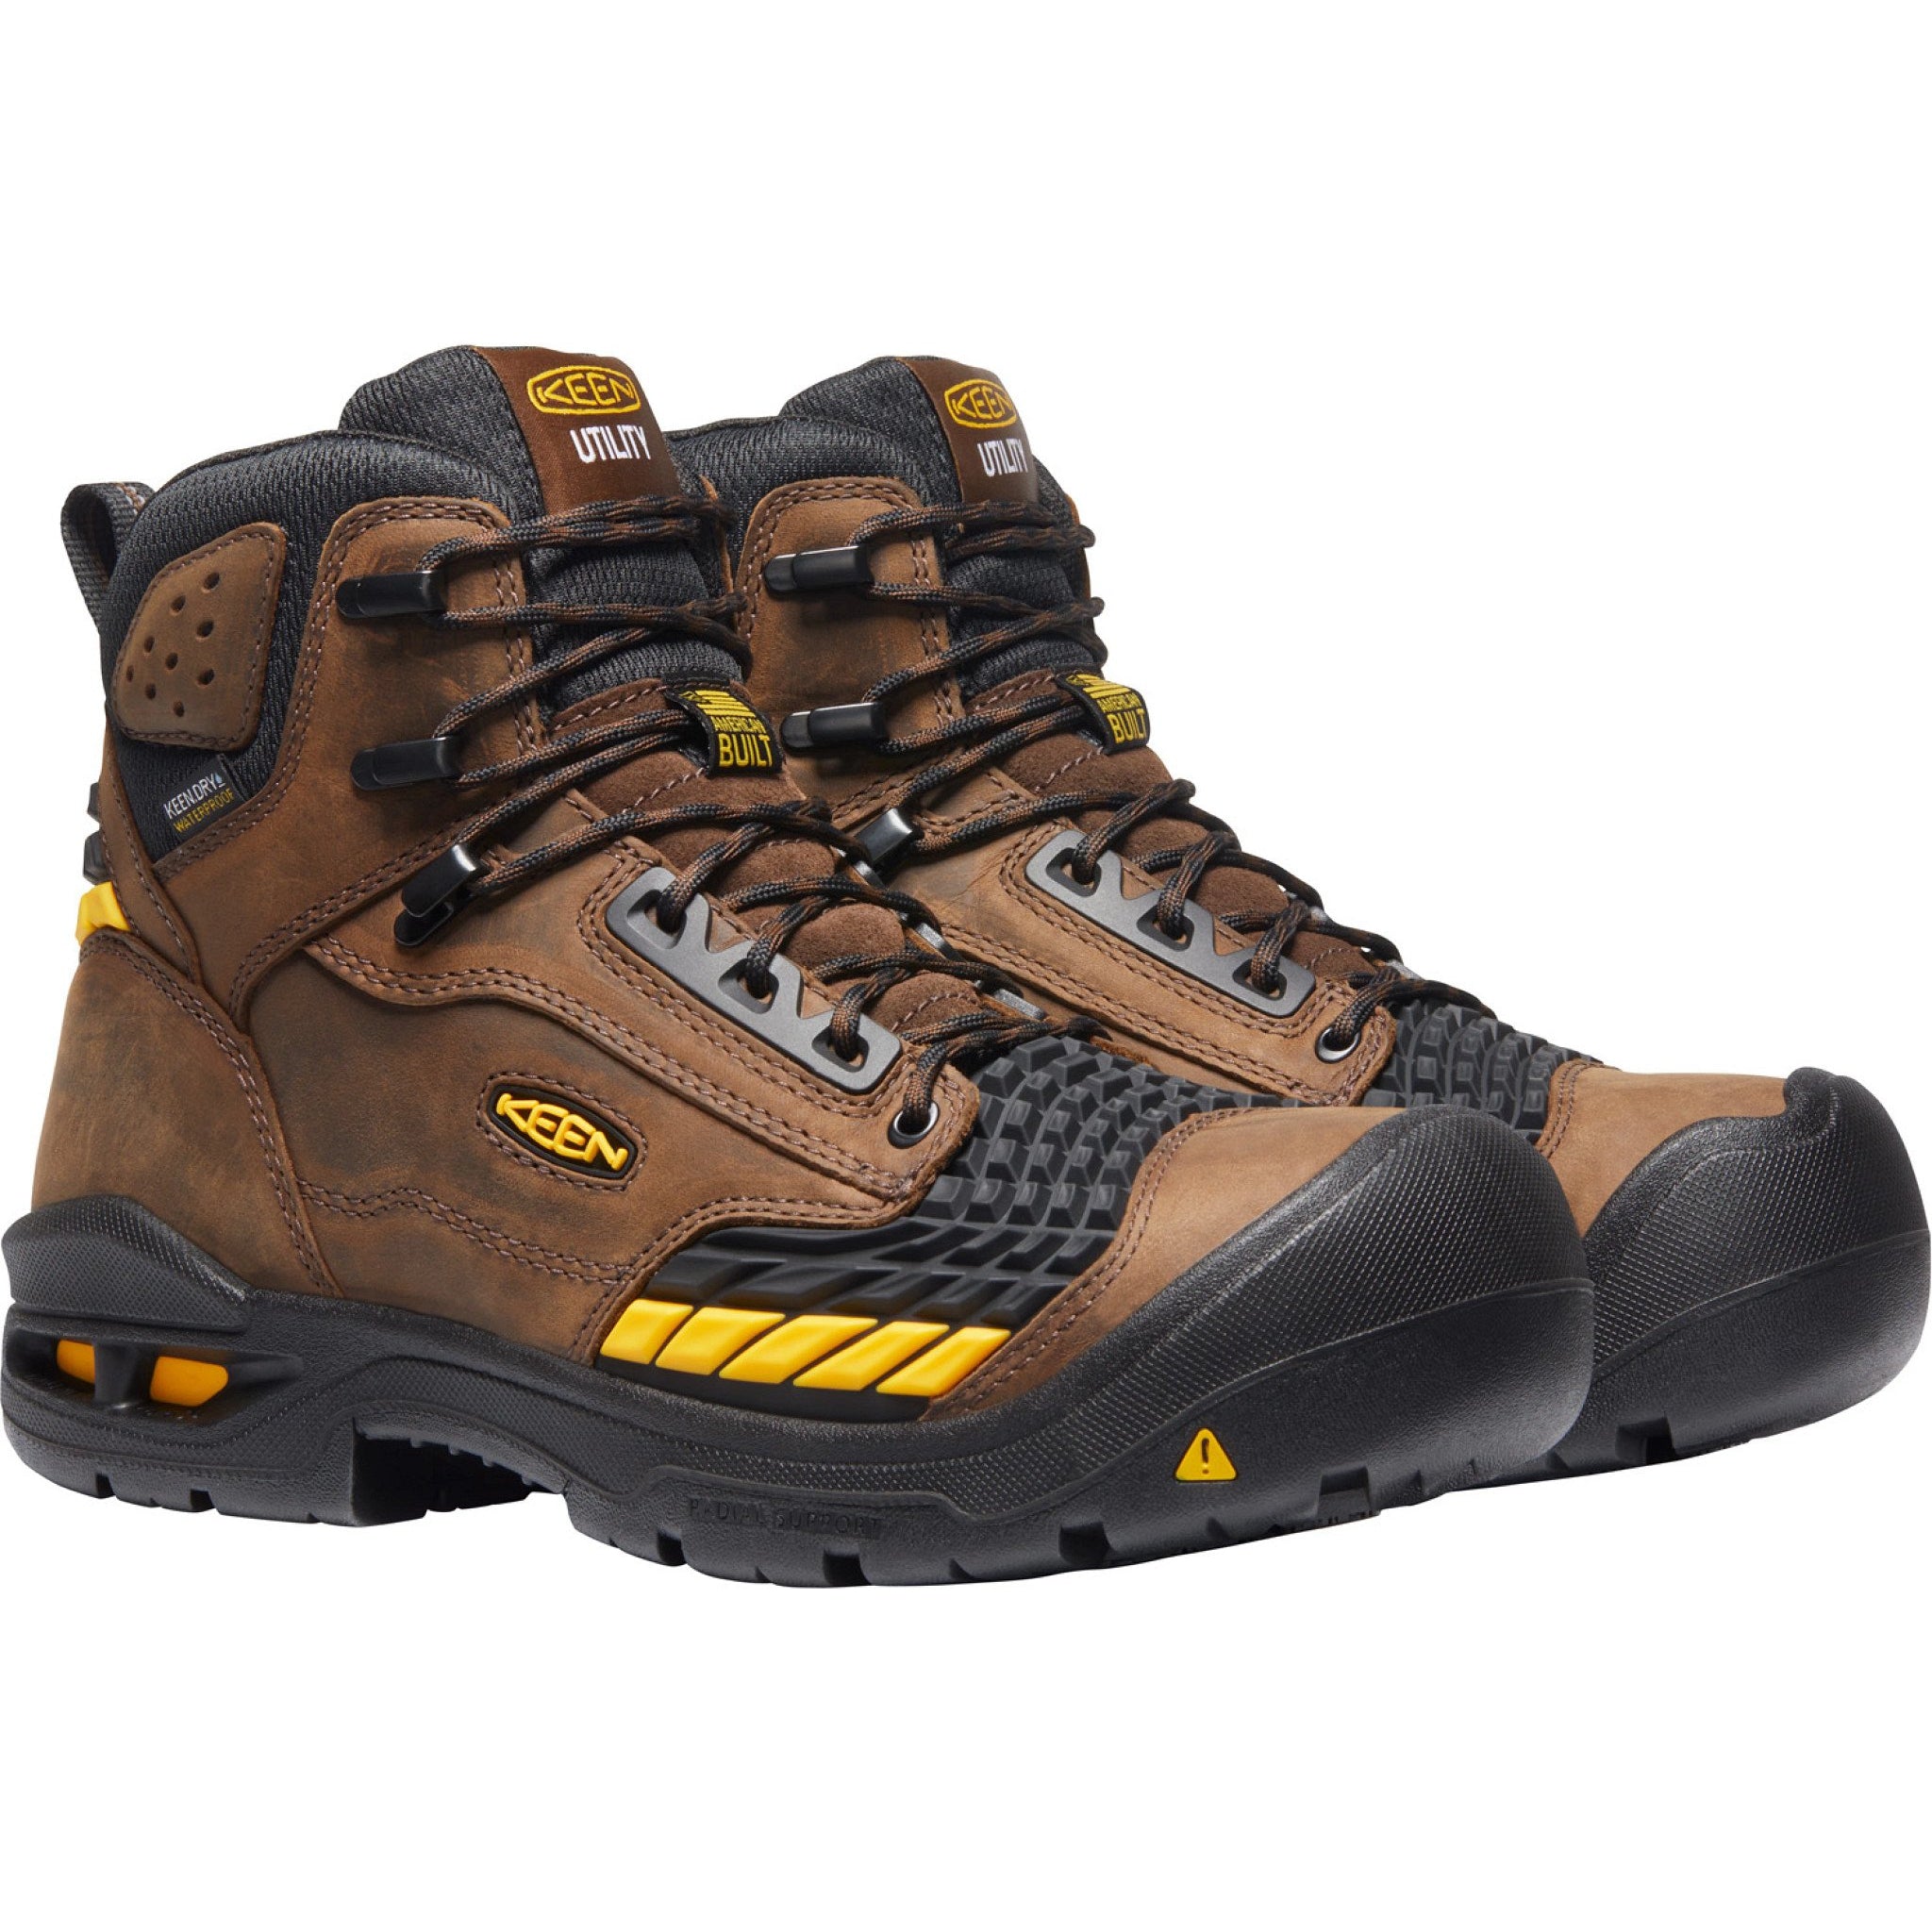 Keen Utility Men's Troy 6" Carbon-Fiber Toe USA Built WP Work Boot - 1025696 7 / Medium / Dark Earth/Black - Overlook Boots